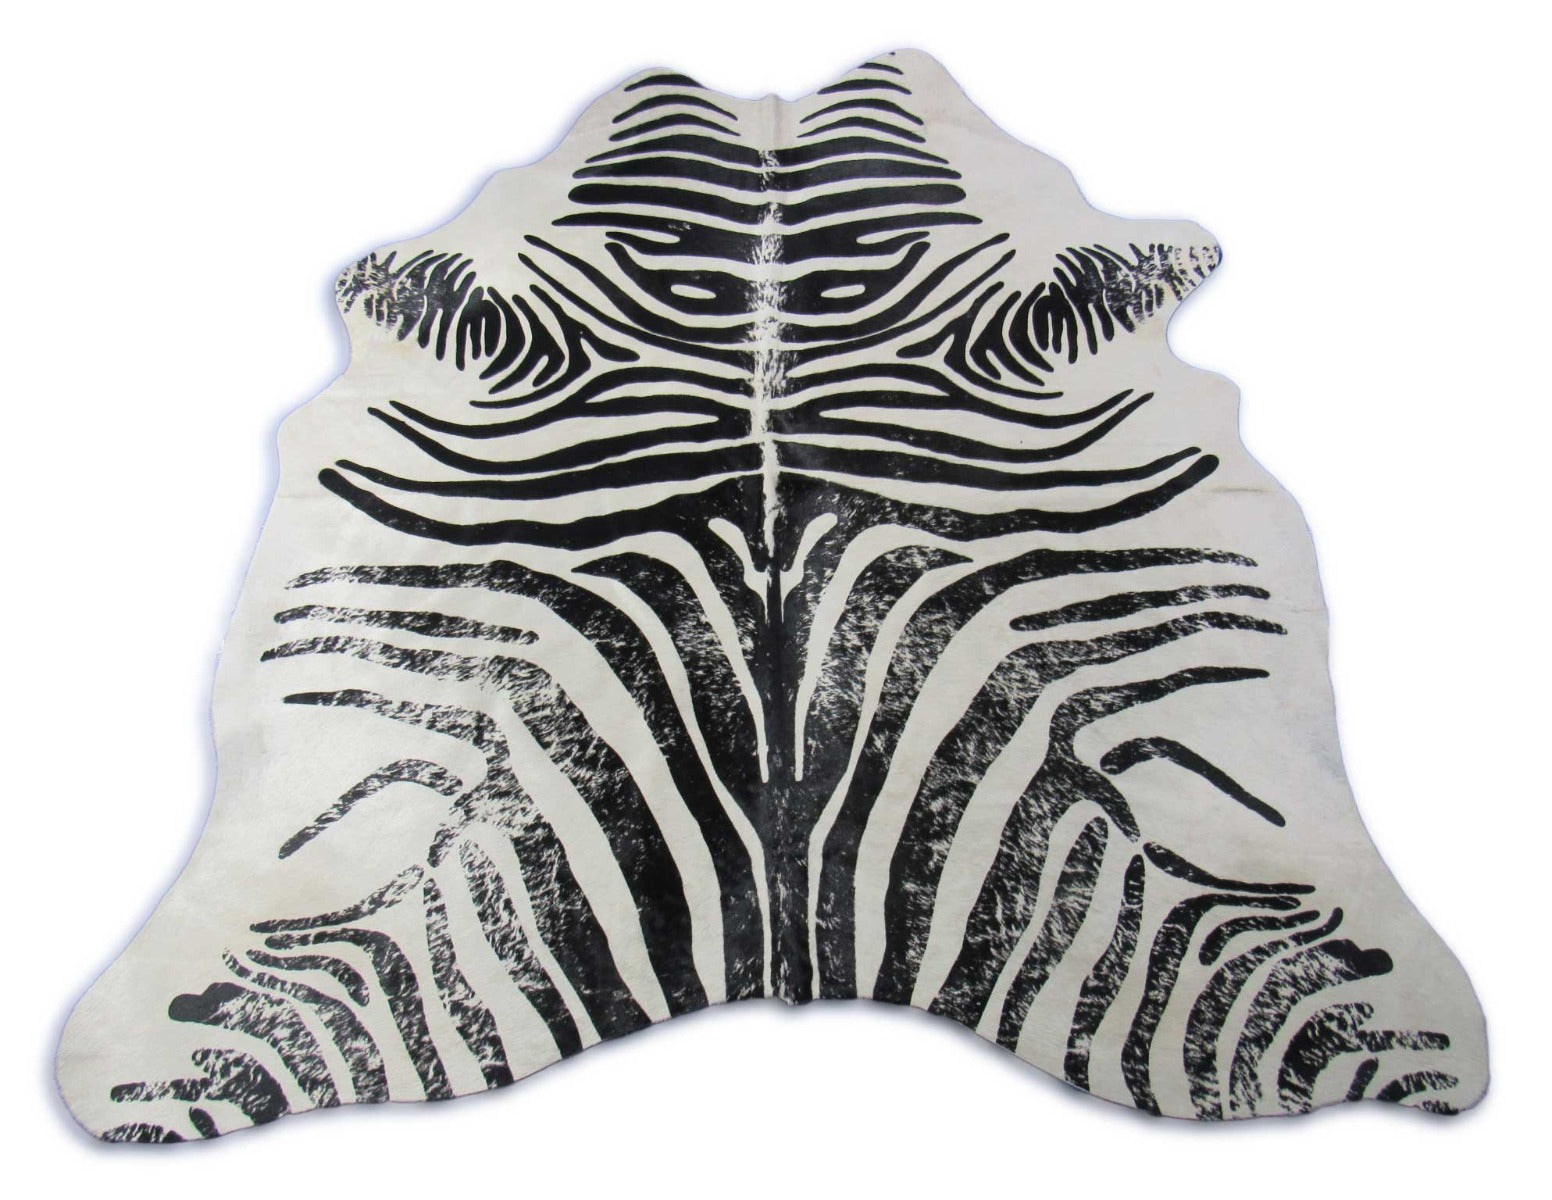 Distressed Zebra Print Cowhide Rug (off-white background) Size: 6.2x5.7 feet K-348